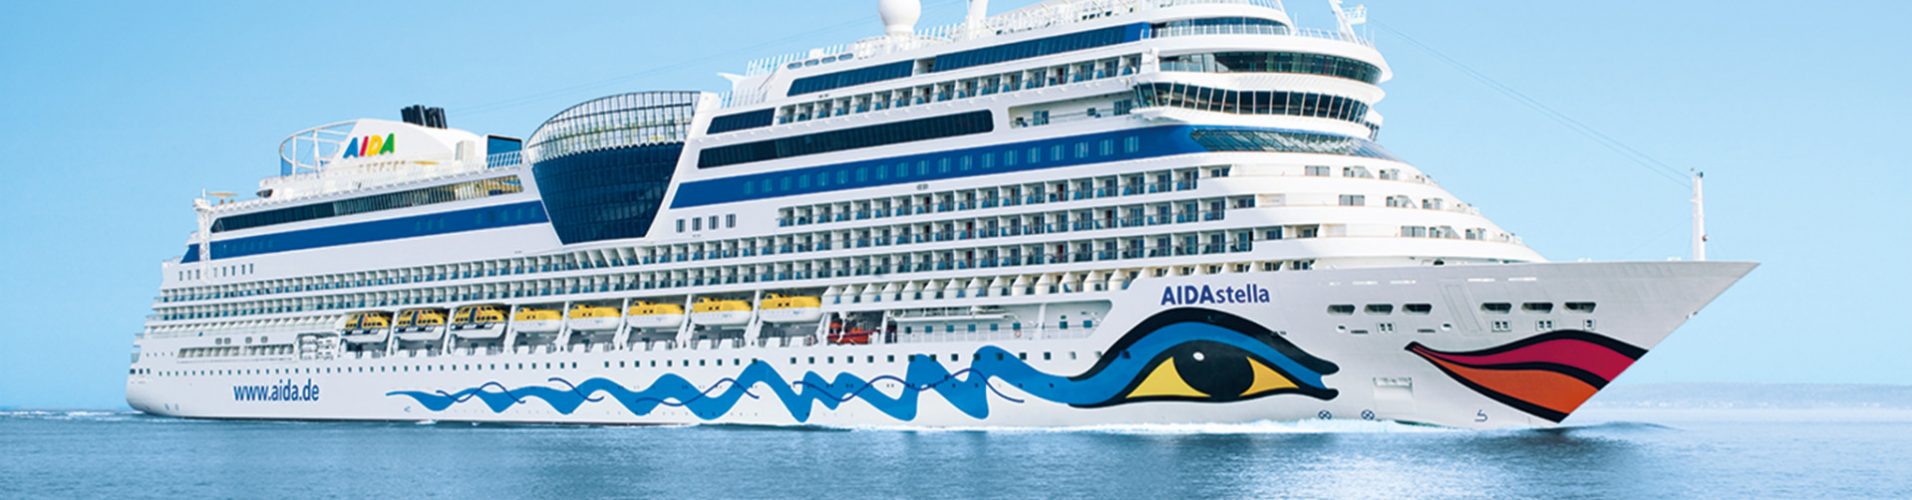 Aida-Cruises-Aidastella